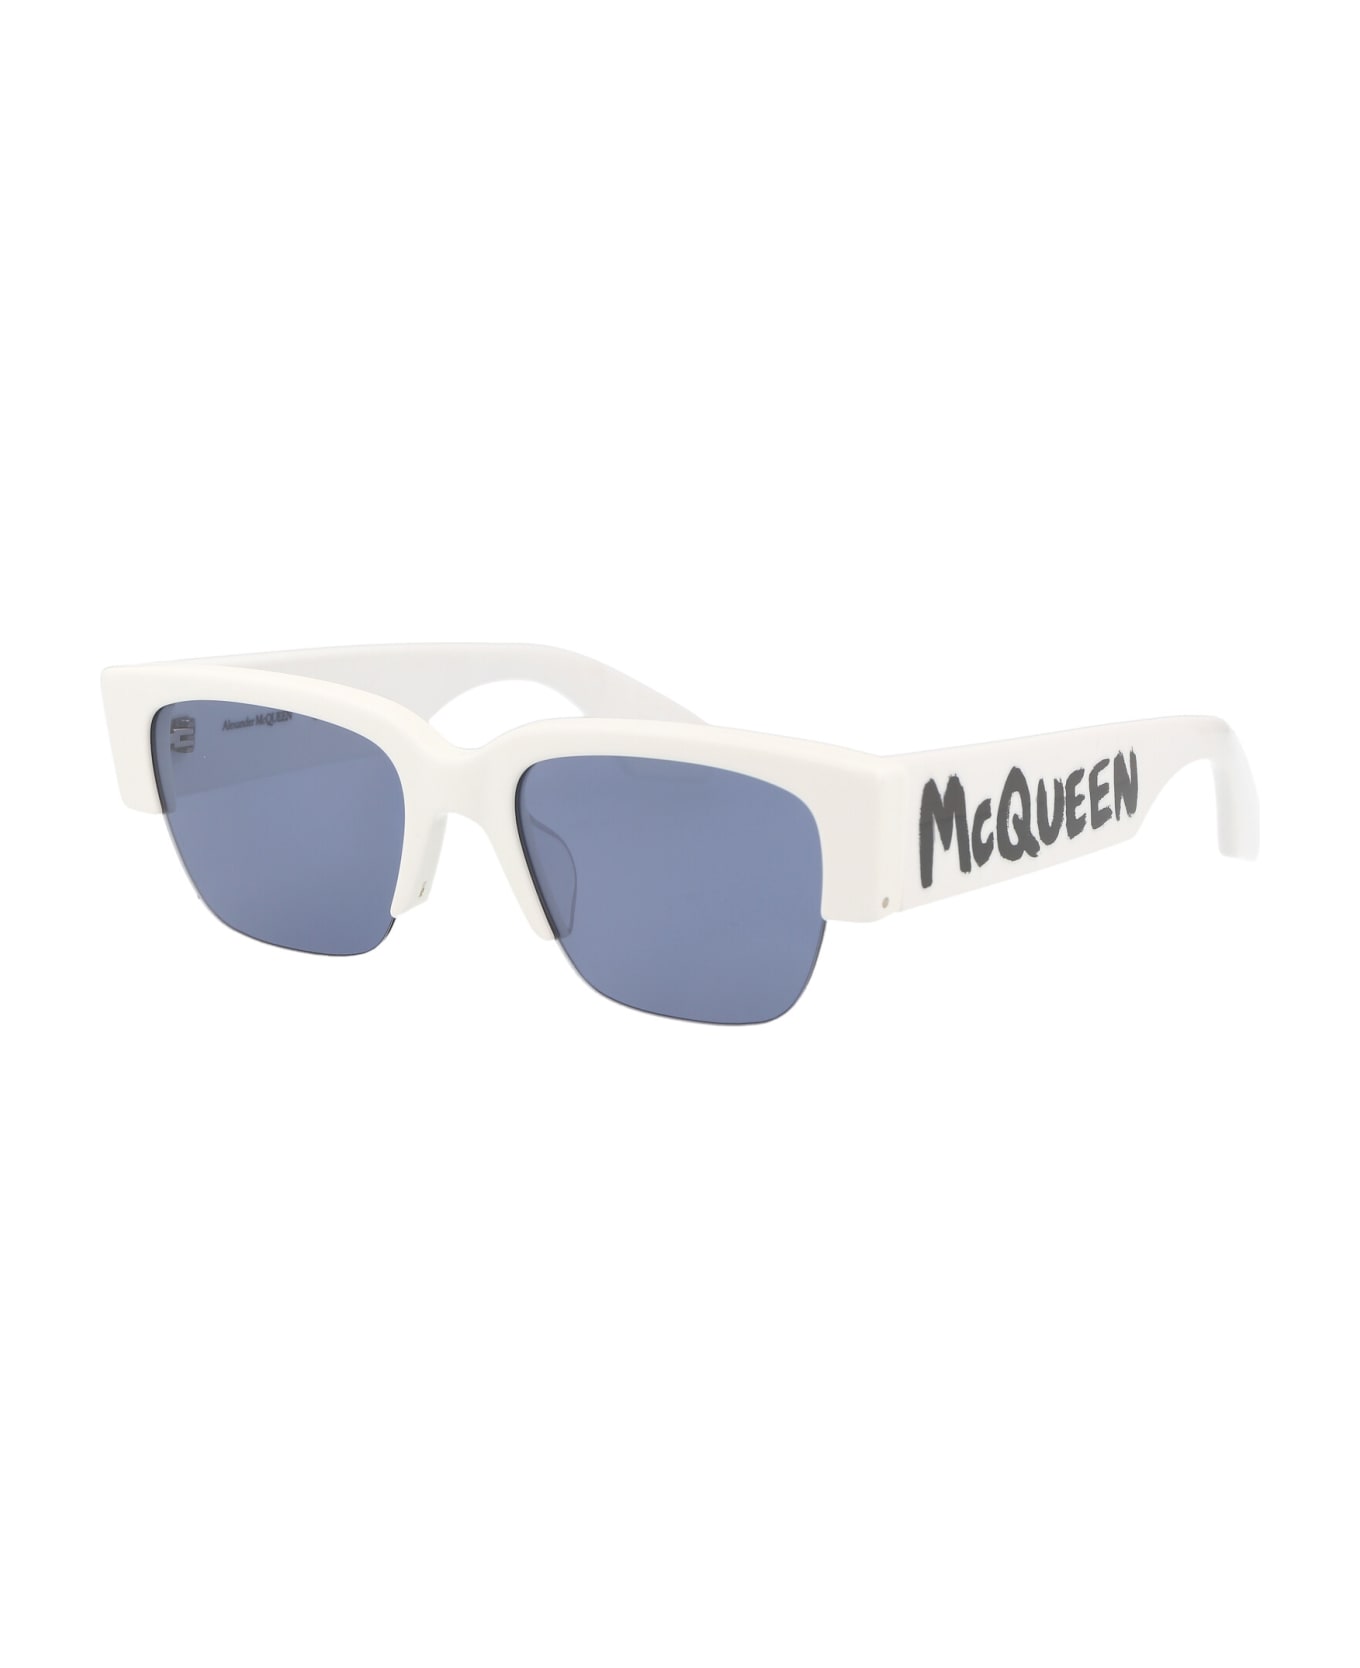 Alexander McQueen Eyewear Am0405s Sunglasses - 004 WHITE WHITE BLUE